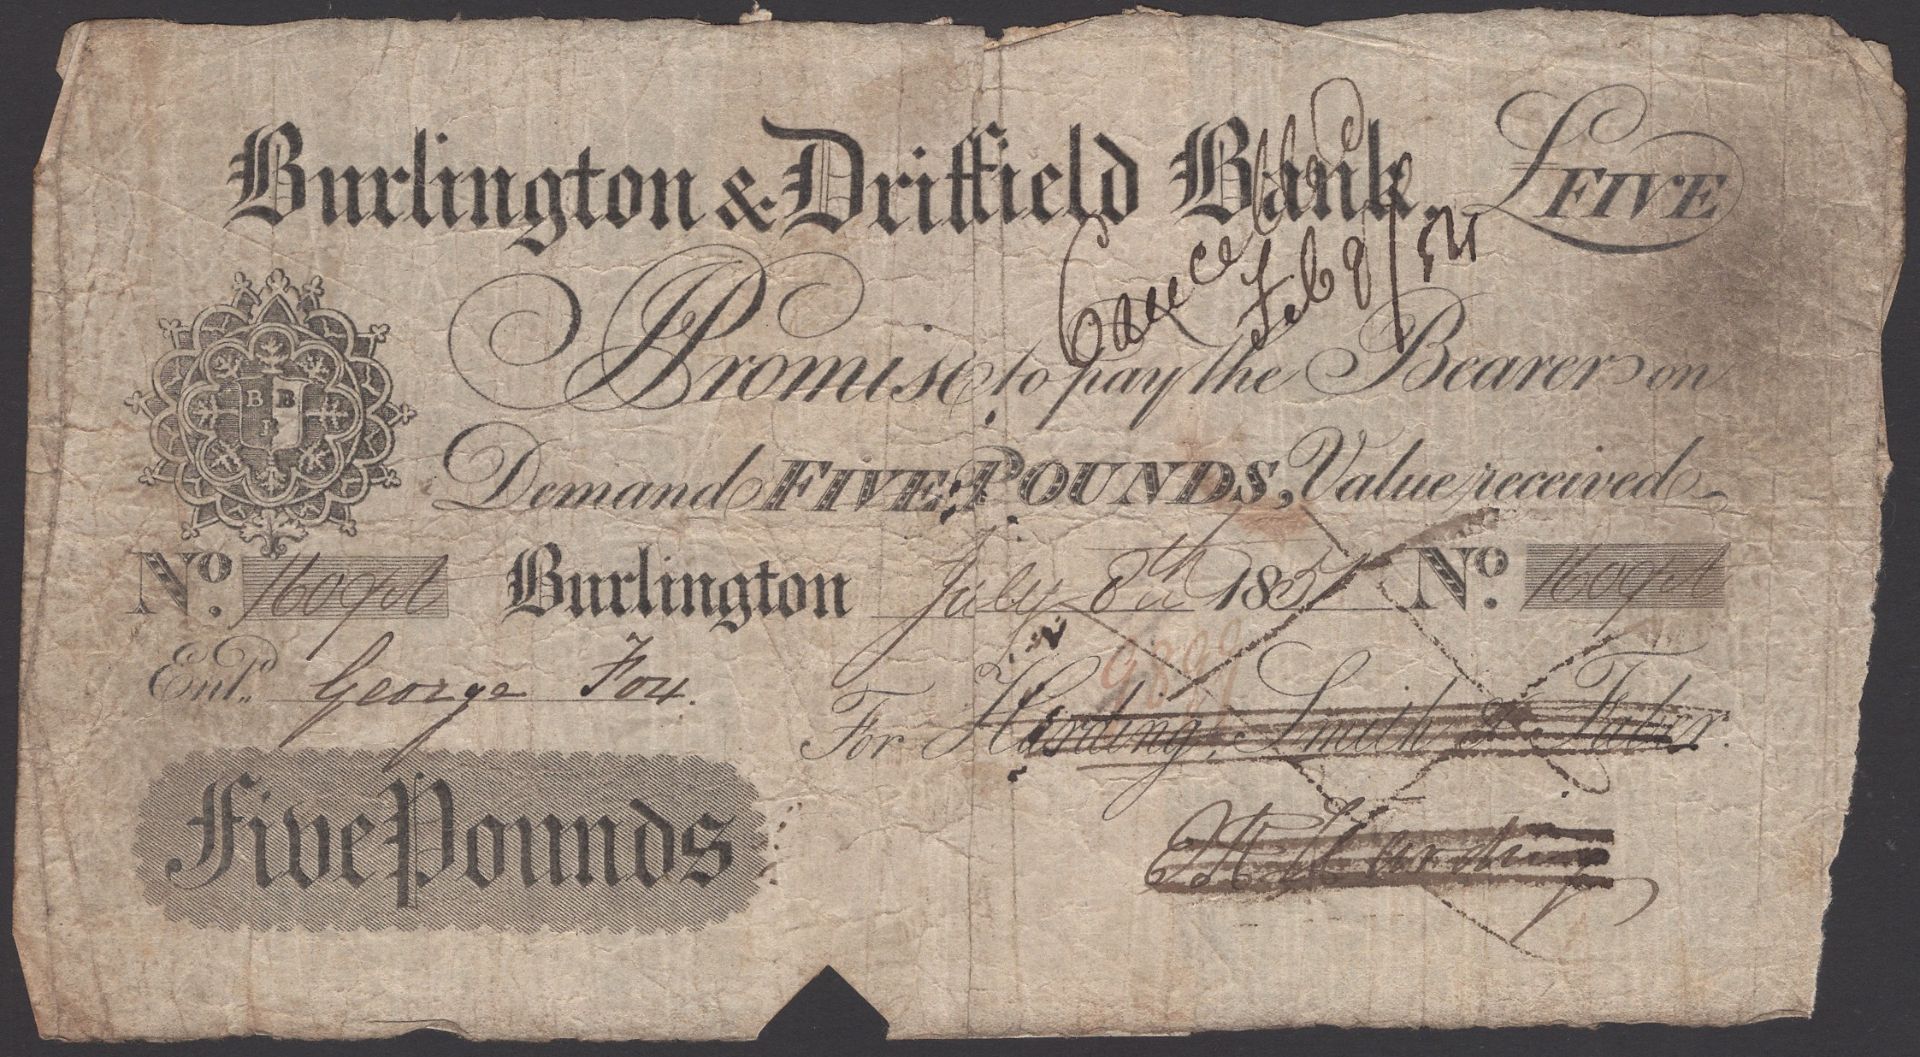 Burlington & Driffield Bank, for Harding, Smith & Faber, Â£5, 8 July 1851, serial number 1609...